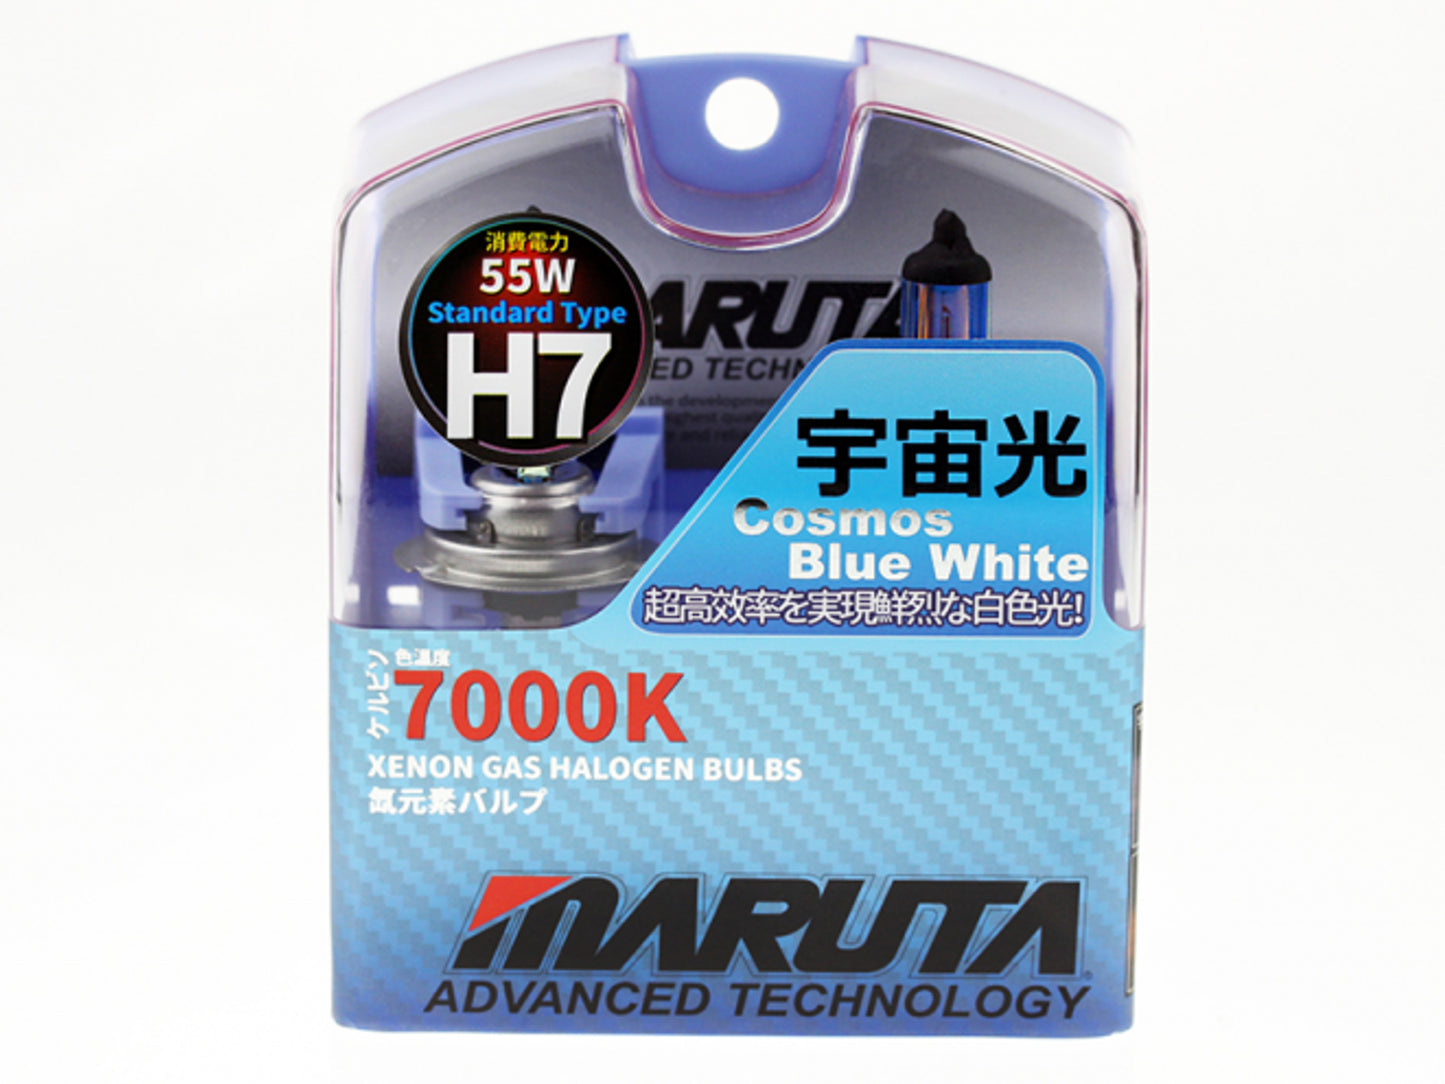 MARUTA | MTEC H7 55W COSMOS BLUE  MT-405 - 7000K Xenon Gas Halogen Lampen - blue white - Bild 1